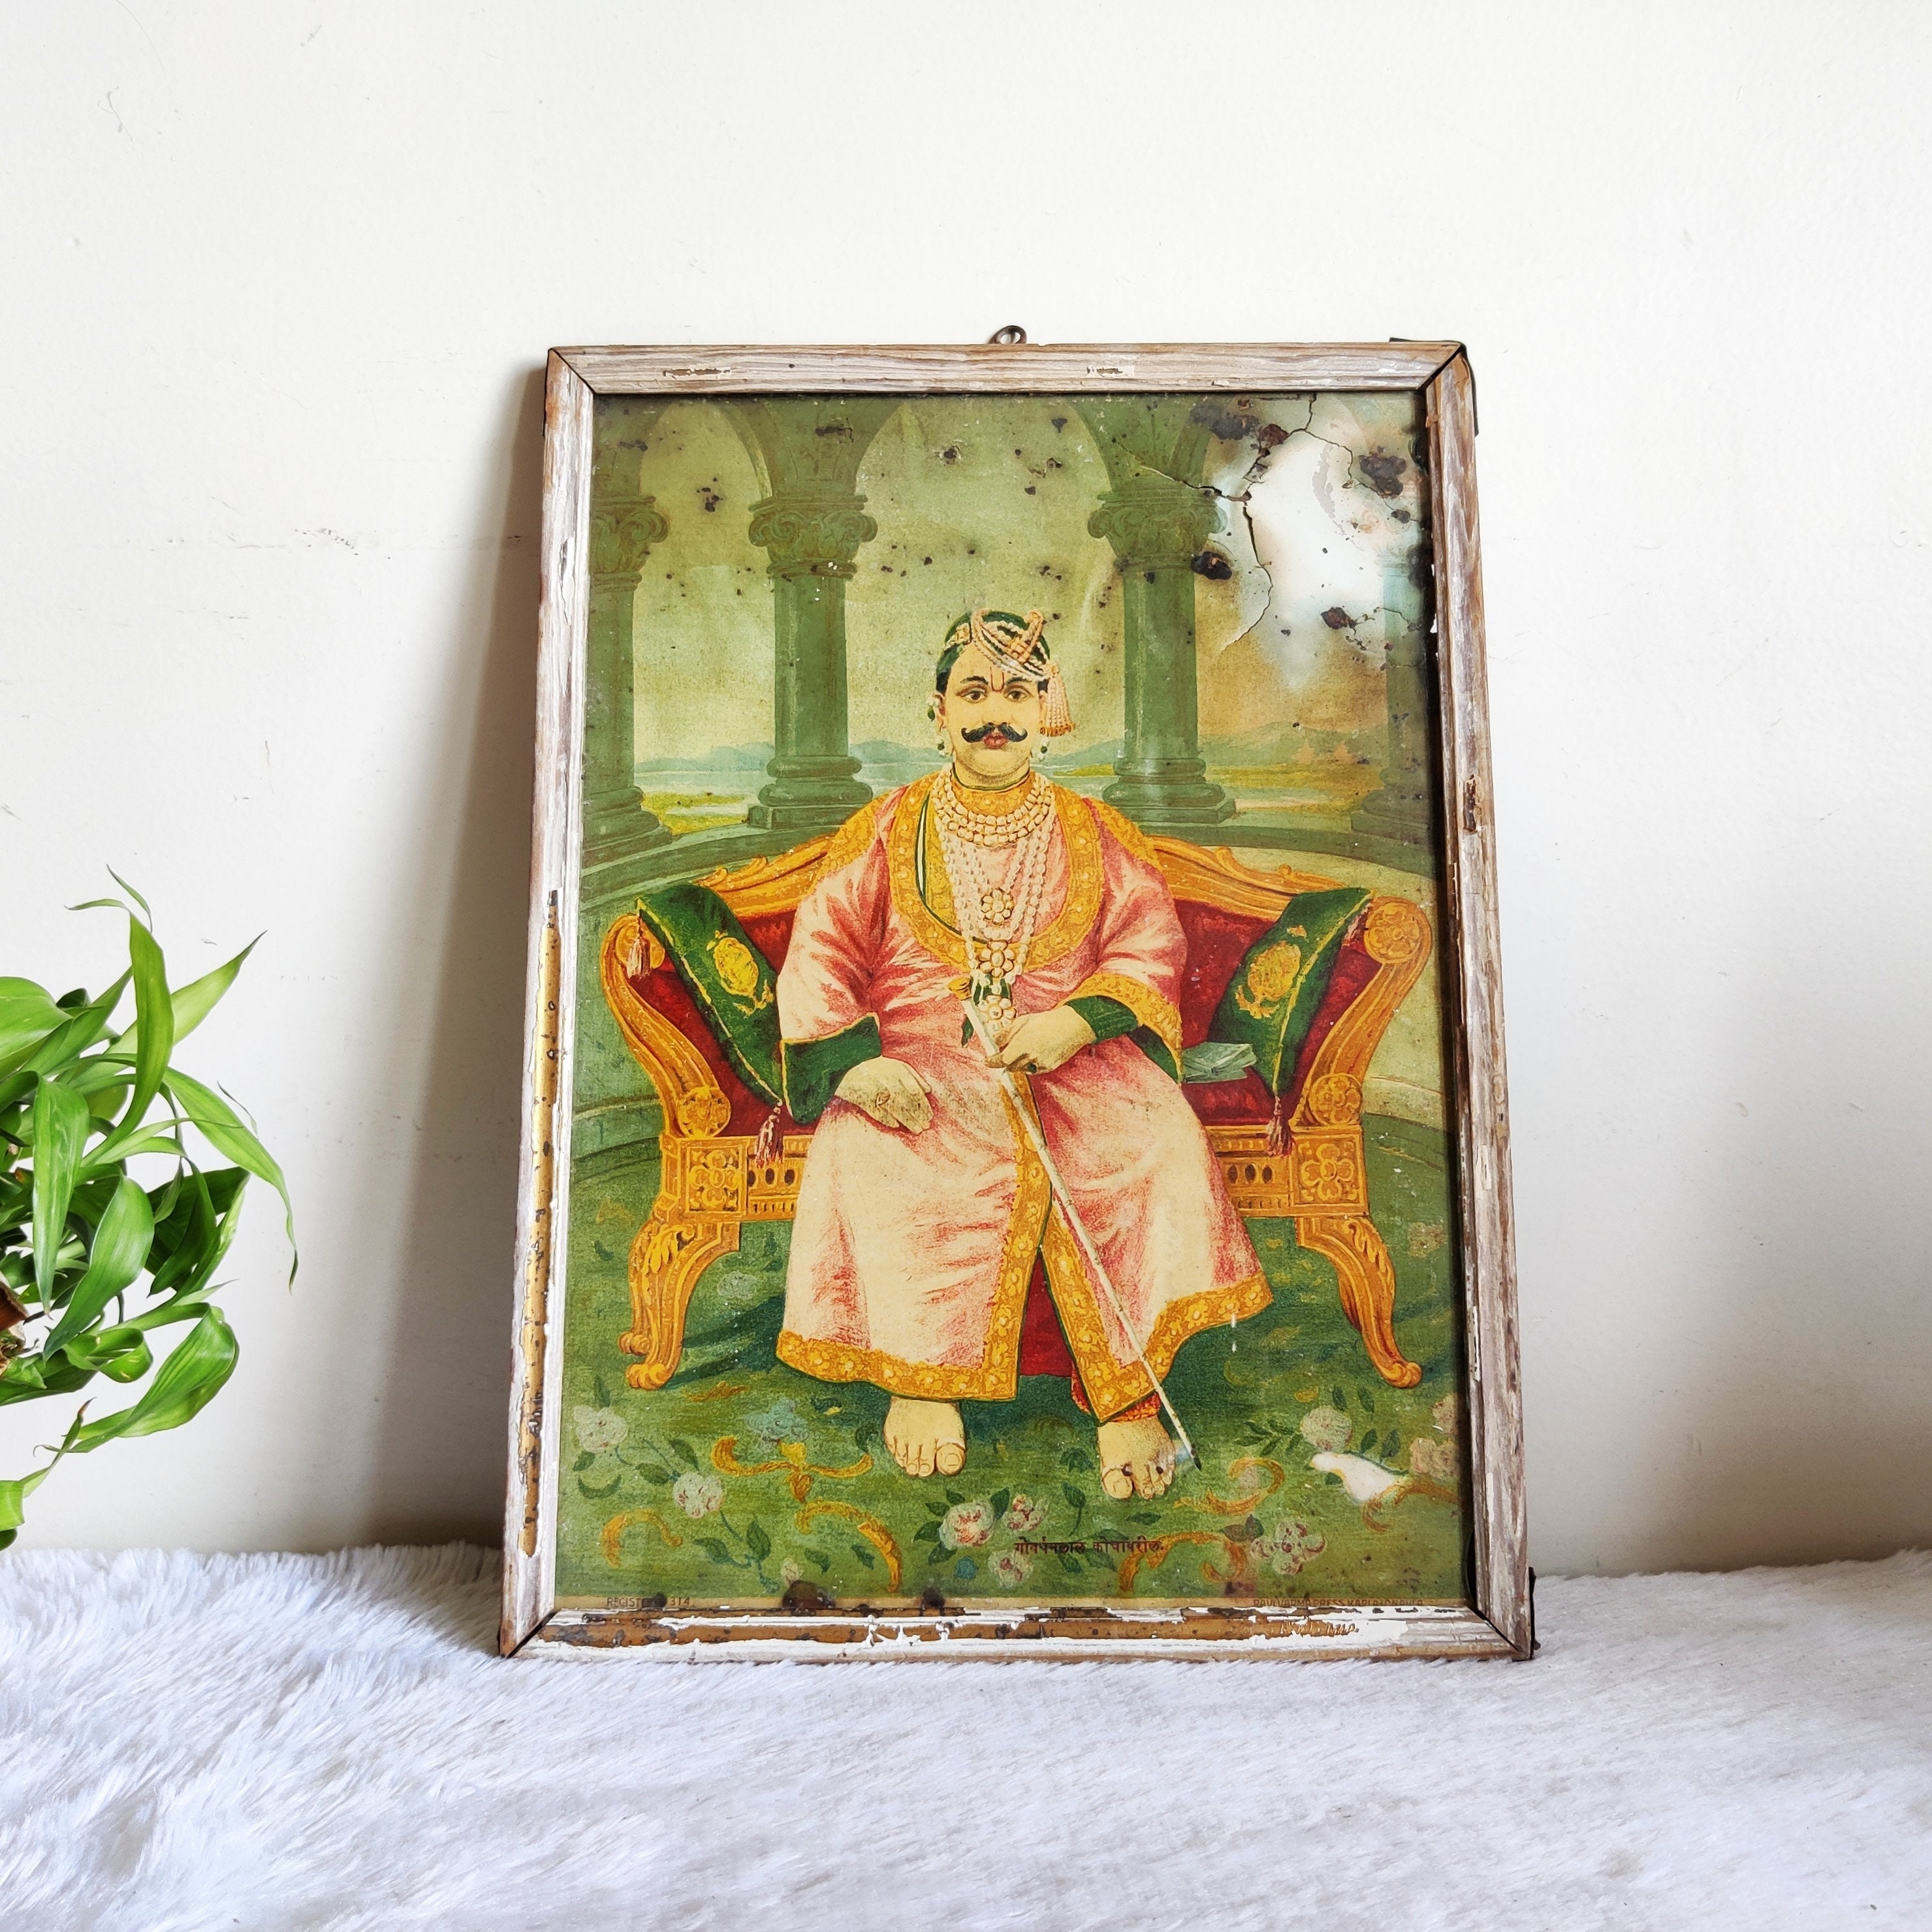 Vintage Raja Ravi Varma Printing Press Print of Tilkayat